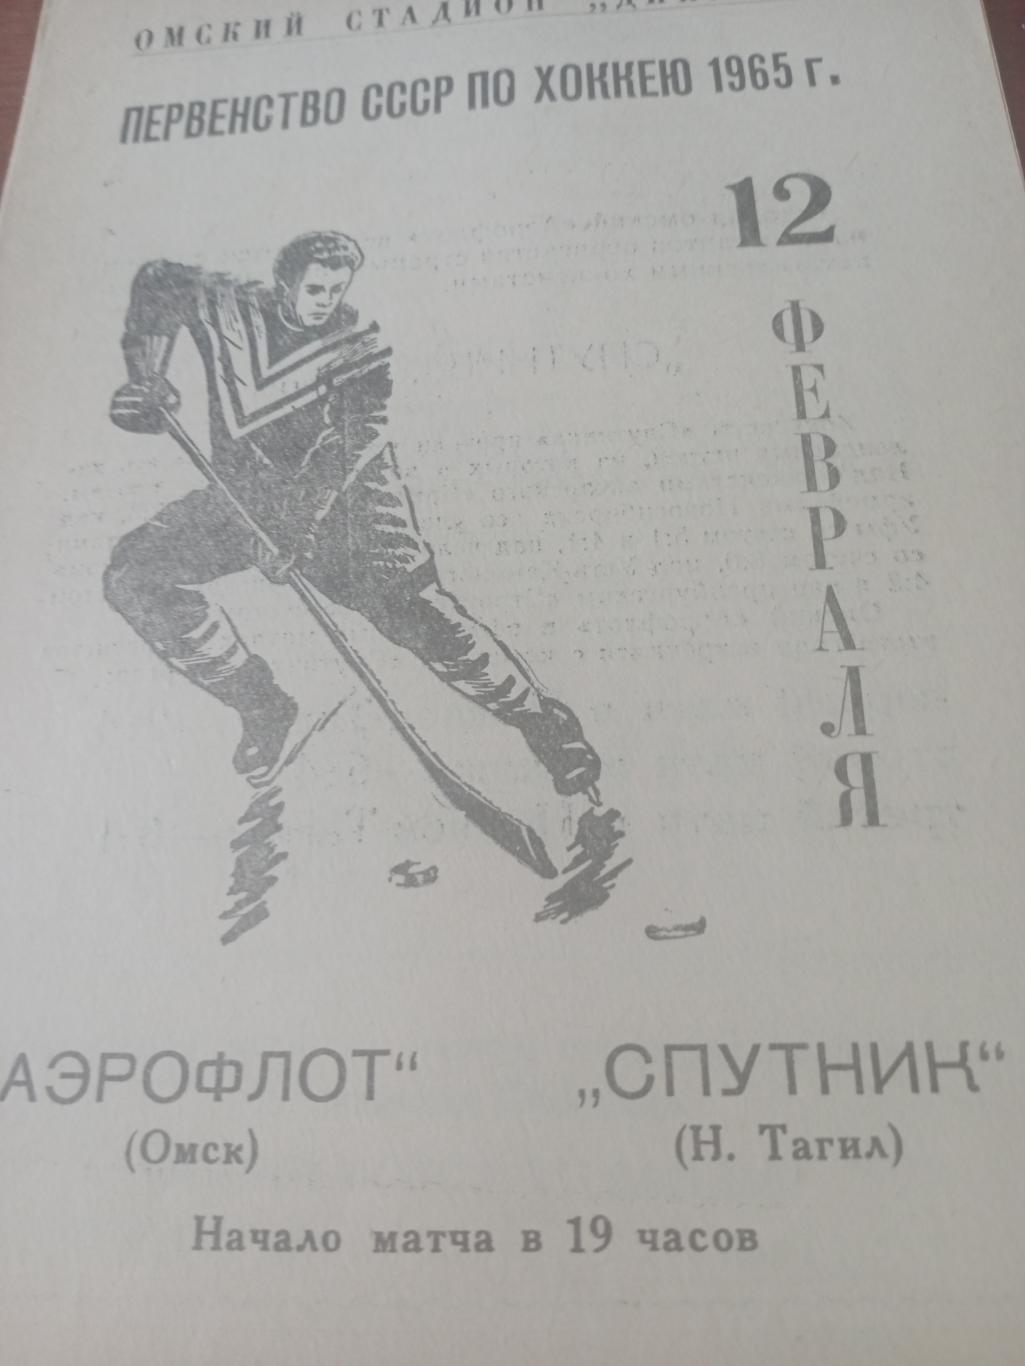 Аэрофлот Омск - Спутник Нижний Тагил. 12 февраля 1965 год